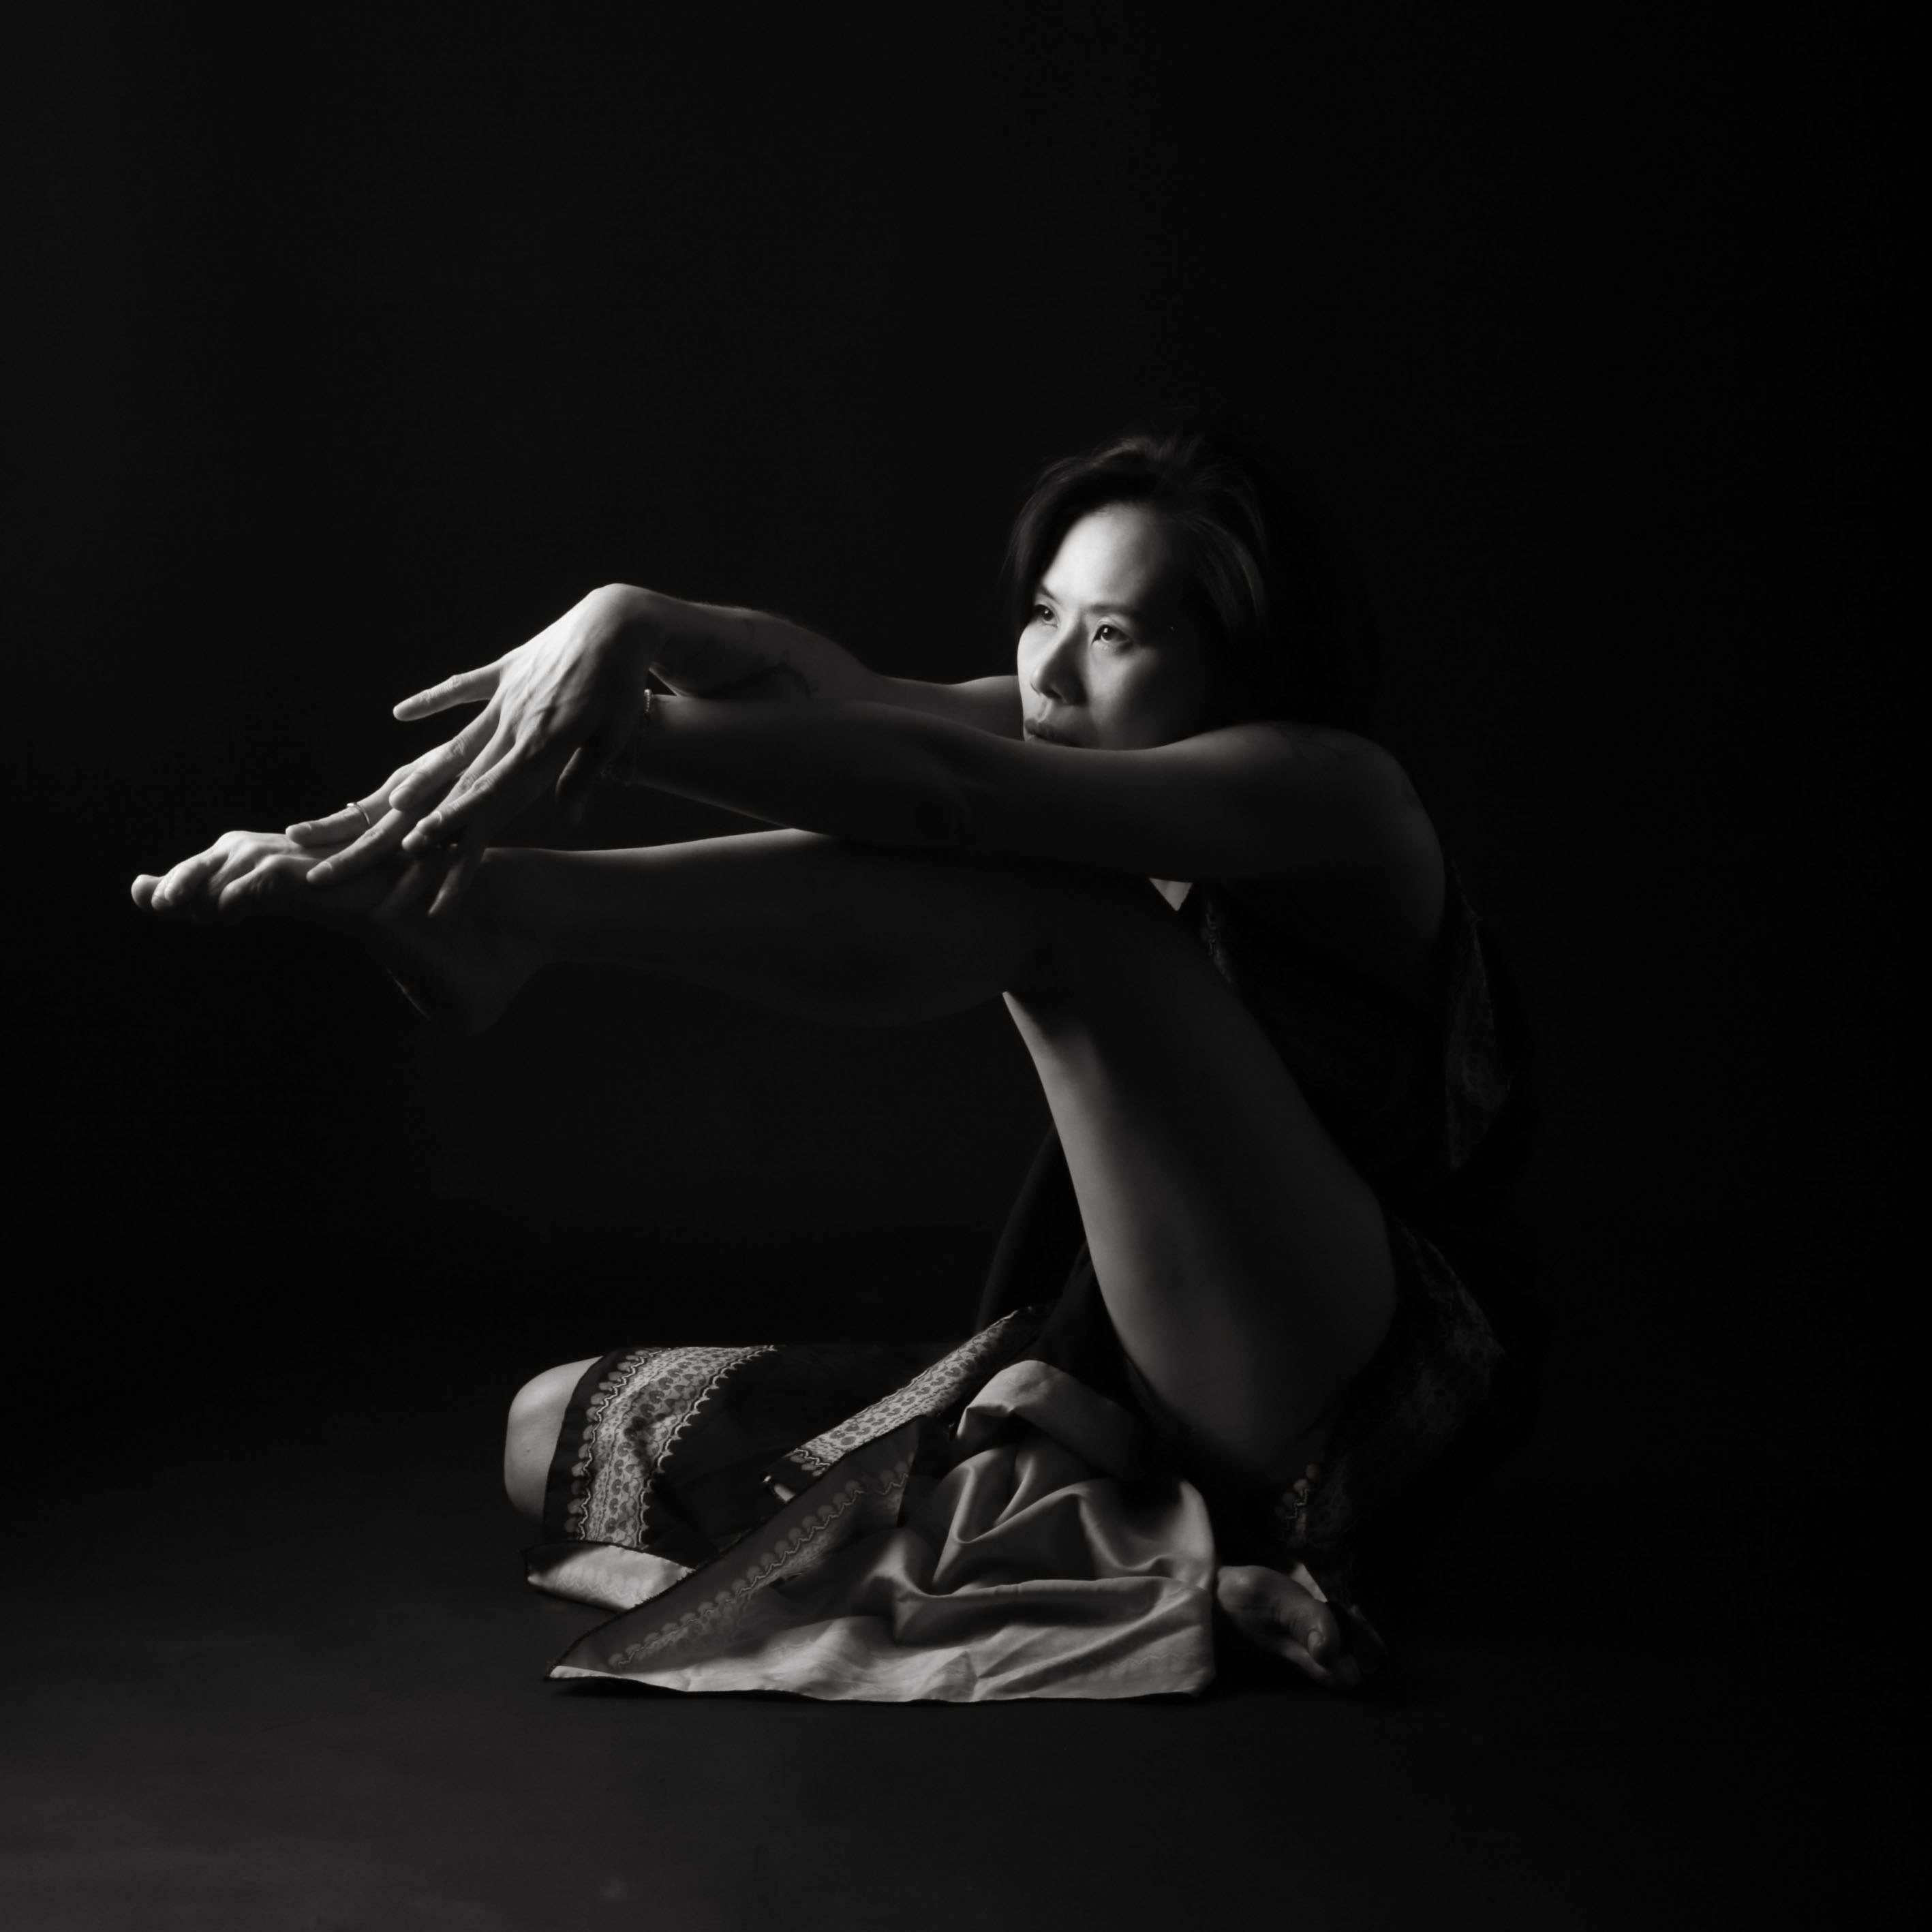 Suelynee ho's model work Photo by Patrice body art